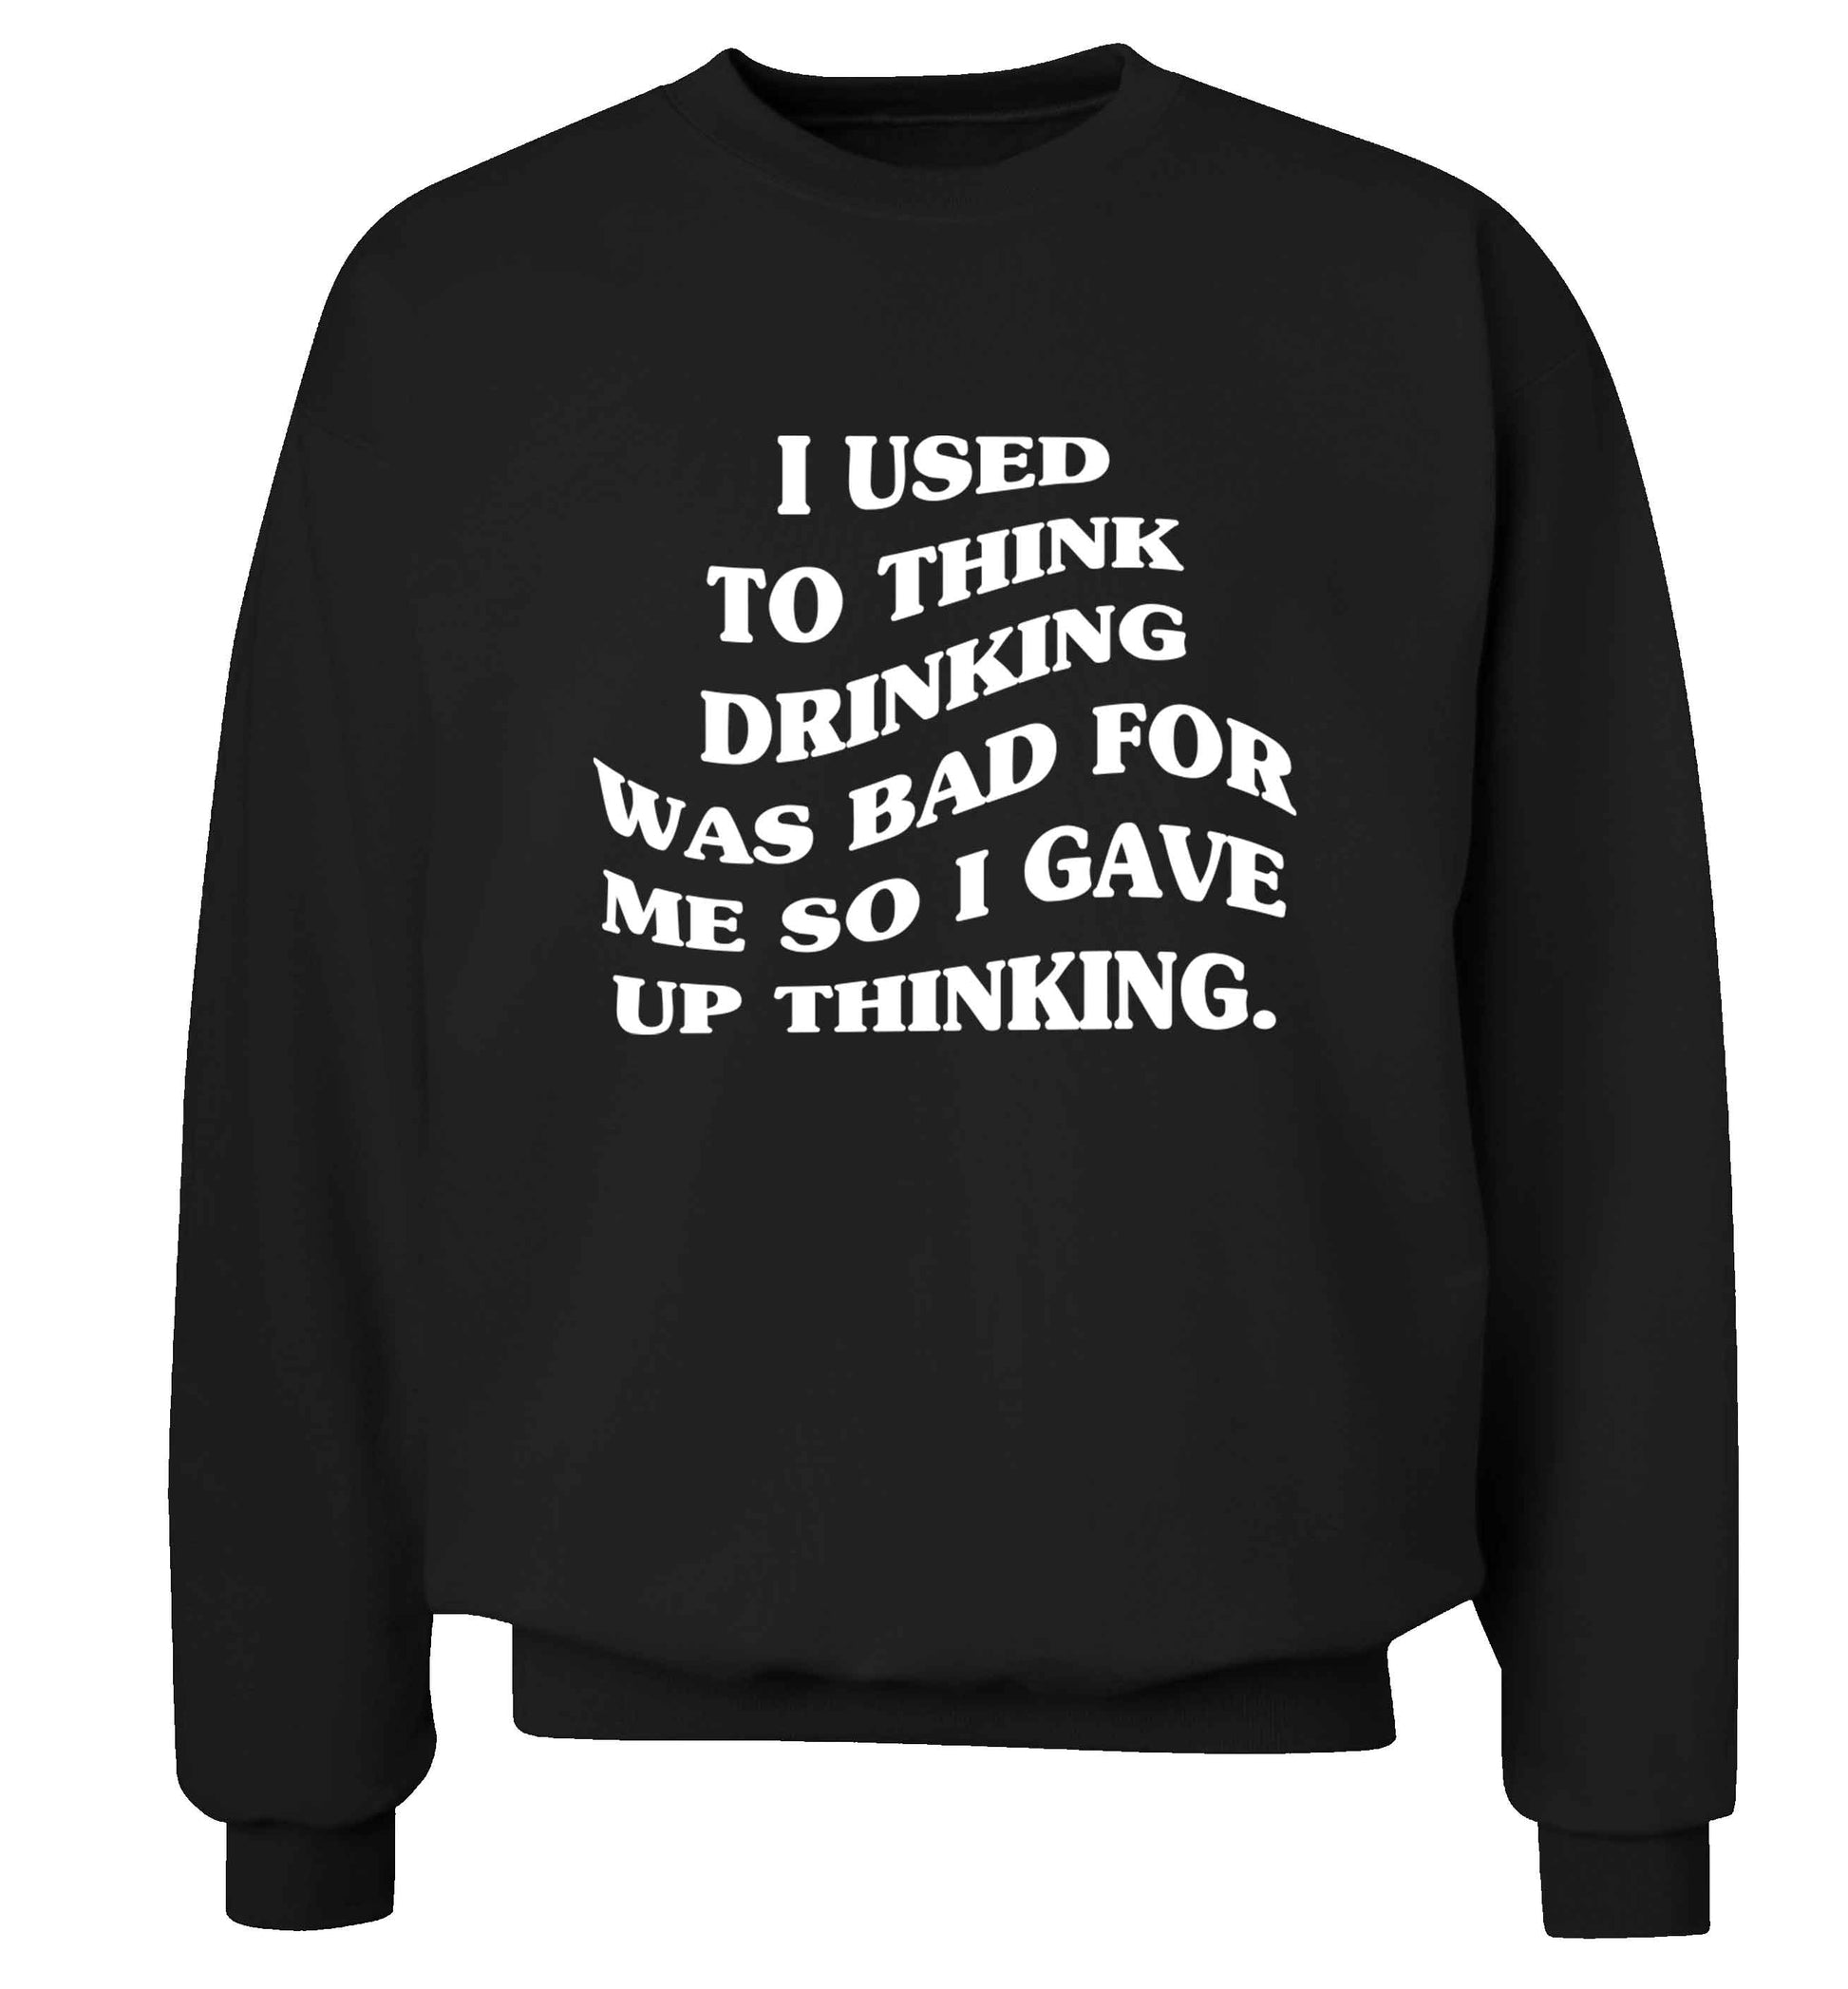 I used to think drinking was bad so I gave up thinking Adult's unisex black Sweater 2XL